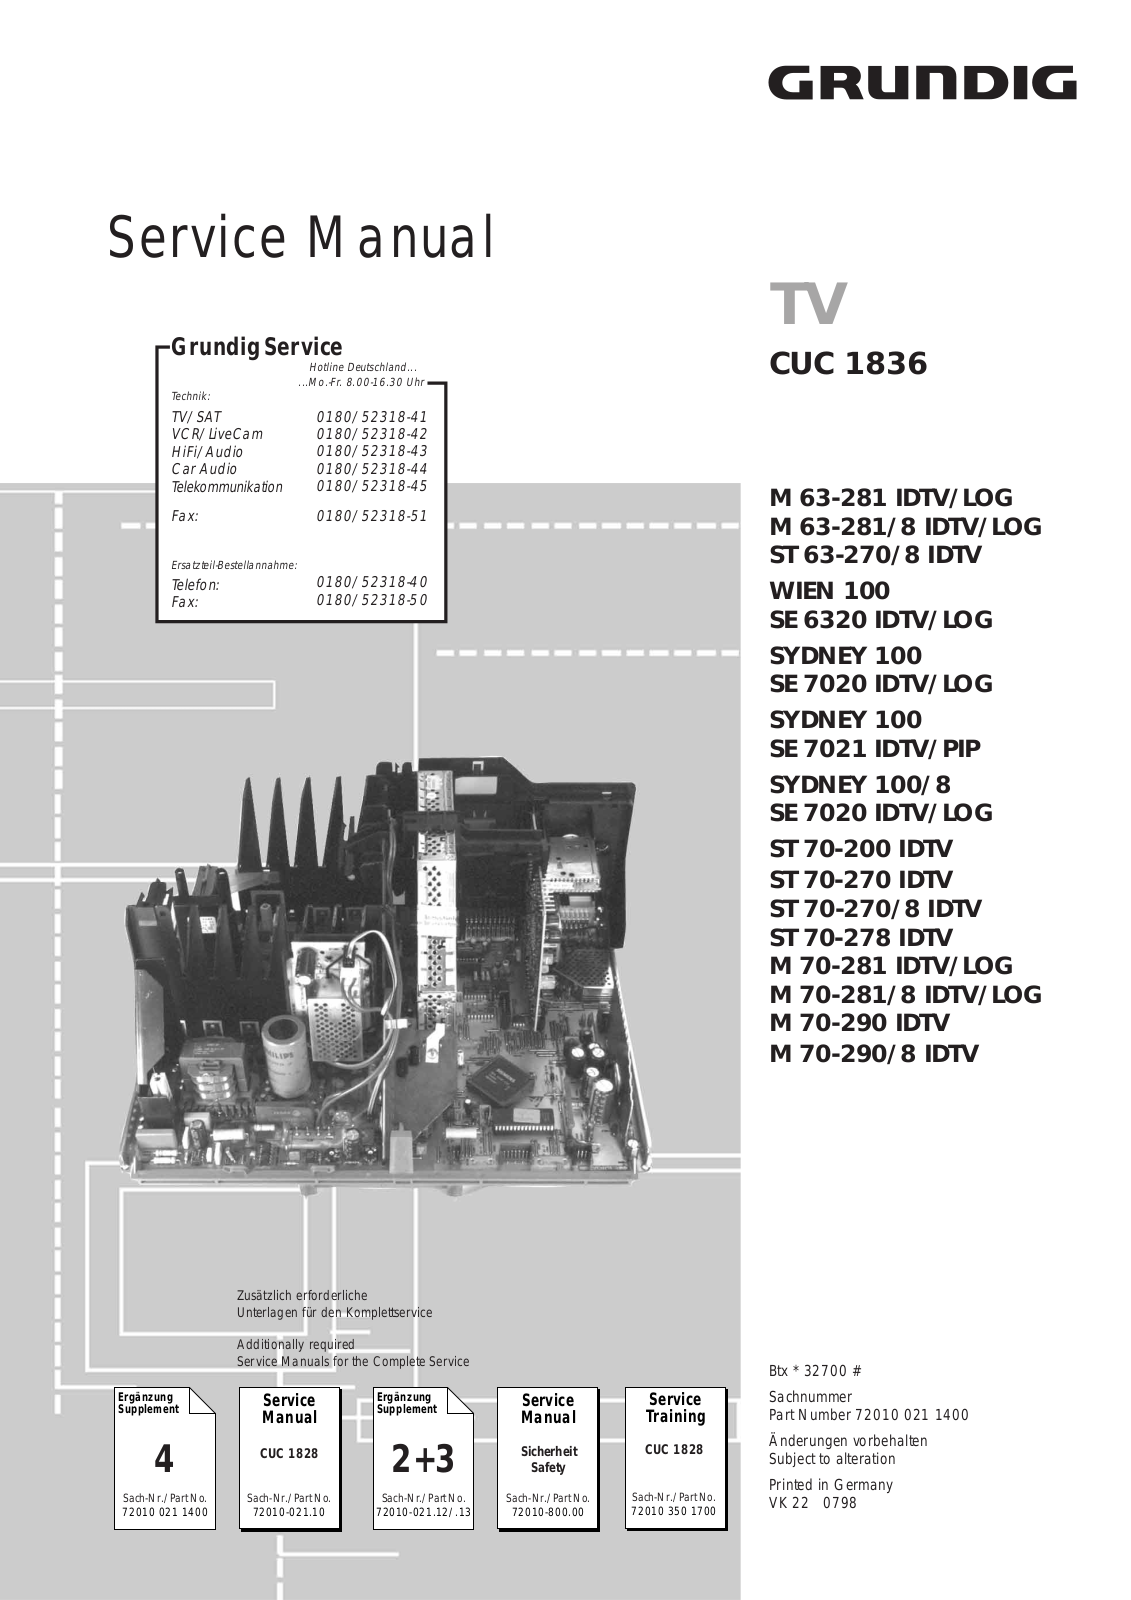 Grundig M 63-281 IDTV-LOG, M 63-281-8 IDTV-LOG, ST 63-270-8 IDTV, ST 70-270 IDTV, ST 70-278 IDTV Service Manual